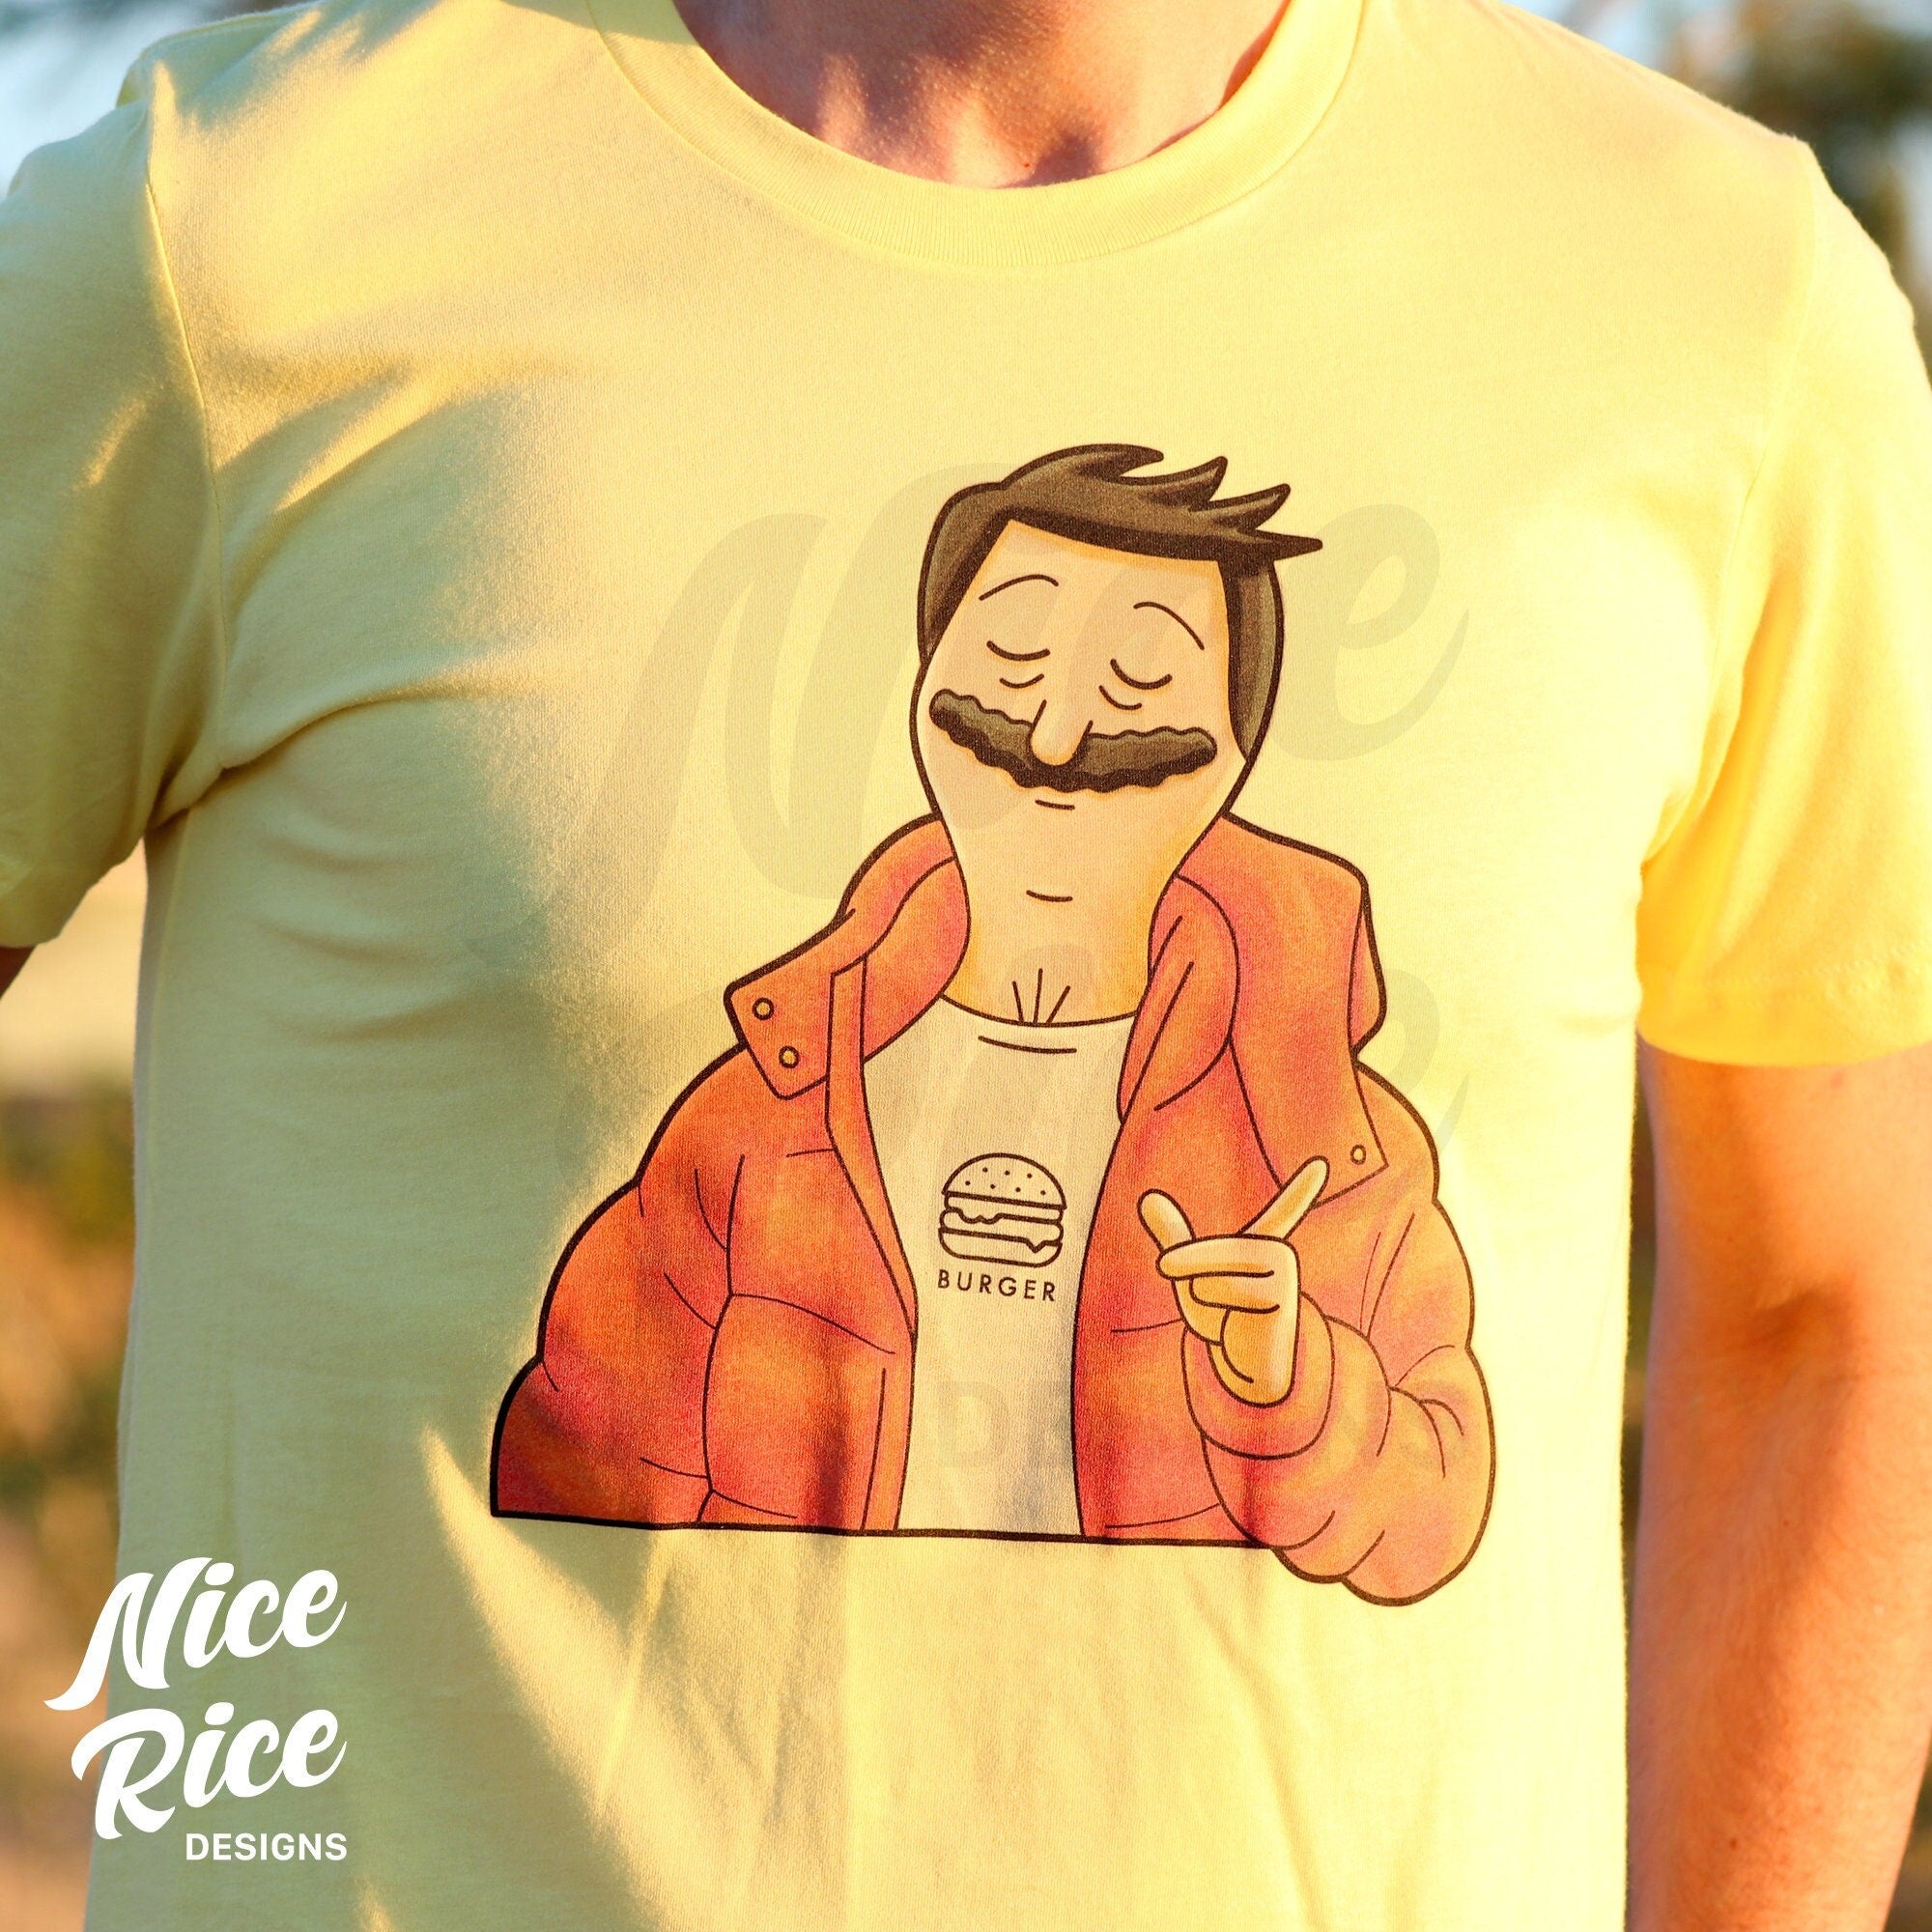 Hotline Bob Shirt by Nice Rice Designs